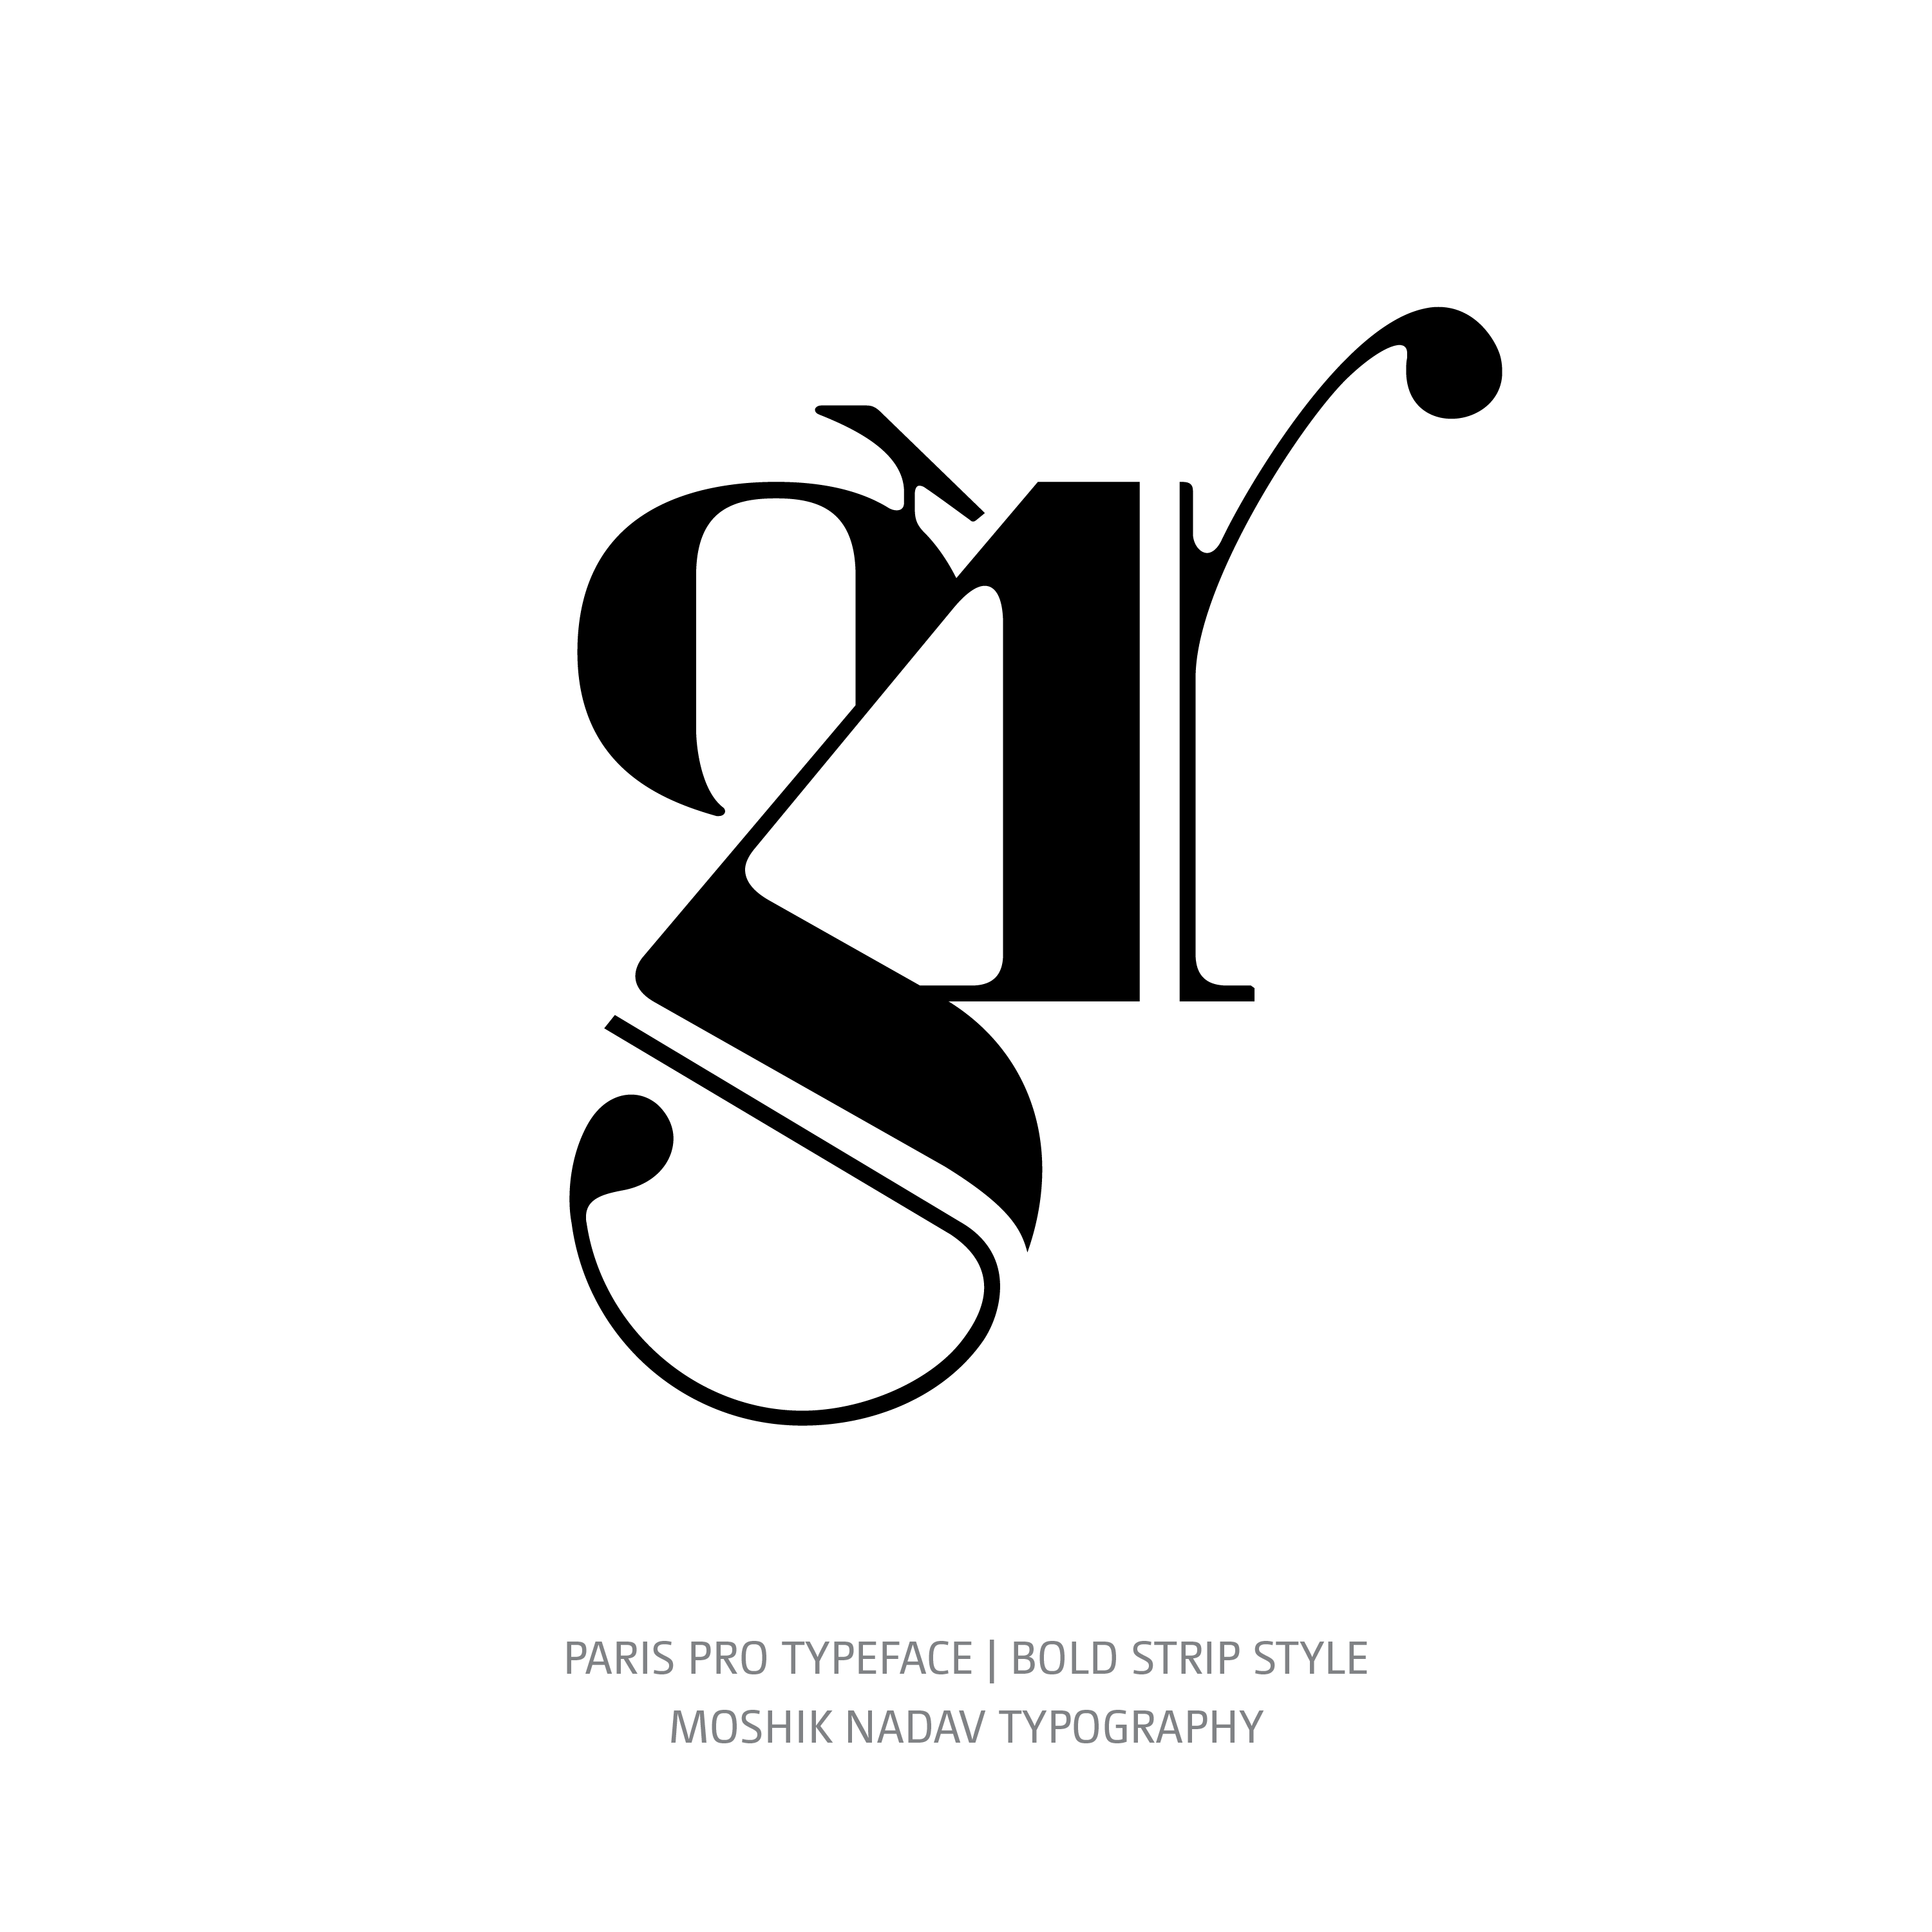 Paris Pro Typeface Bold Strip gr alternate ligature